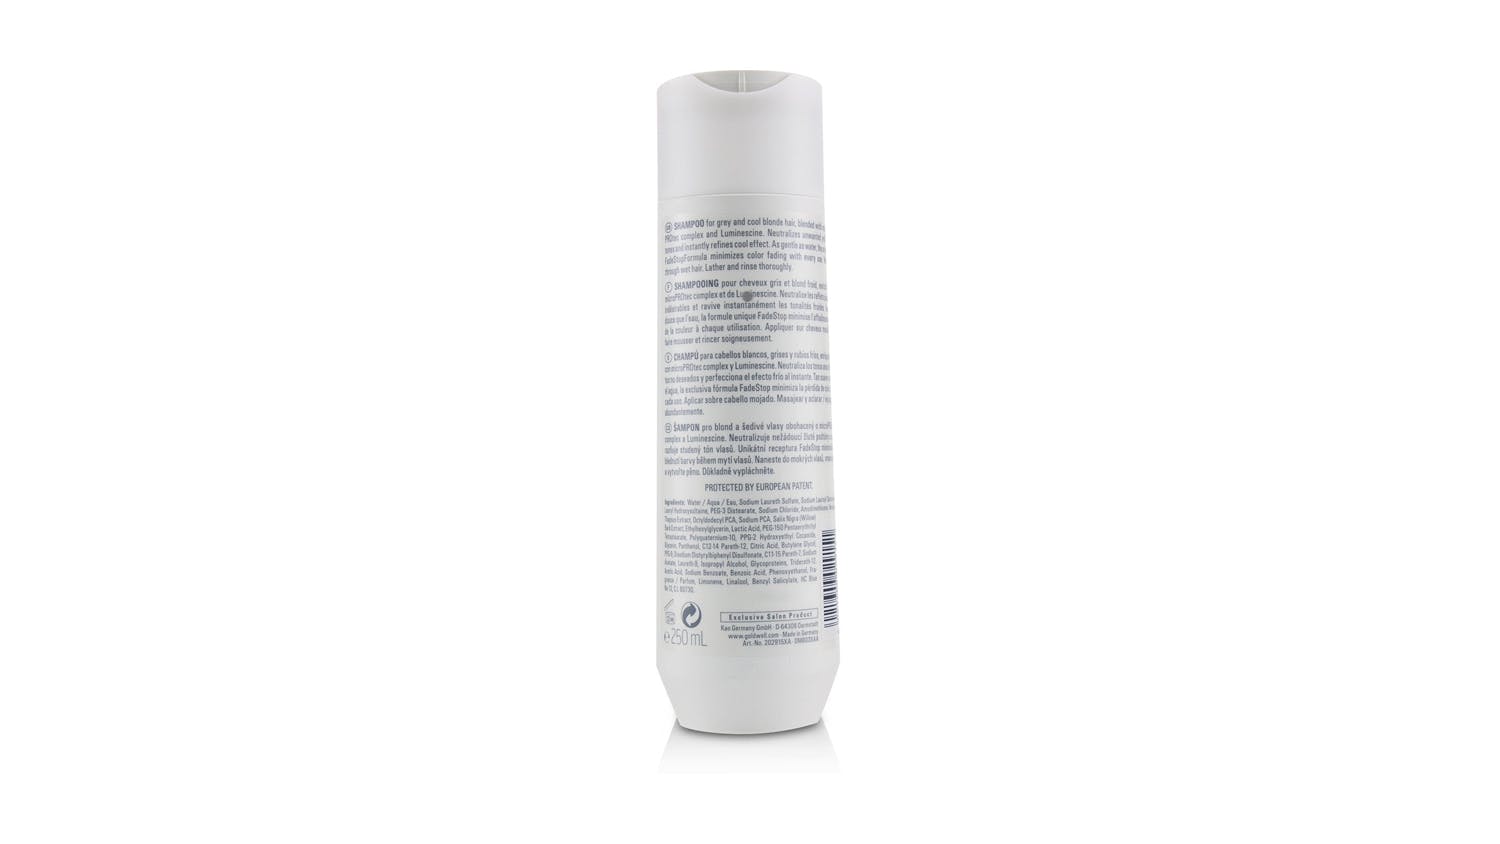 Goldwell Dual Senses Silver Shampoo (Neutralizing For Grey Hair) - 250ml/8.4oz